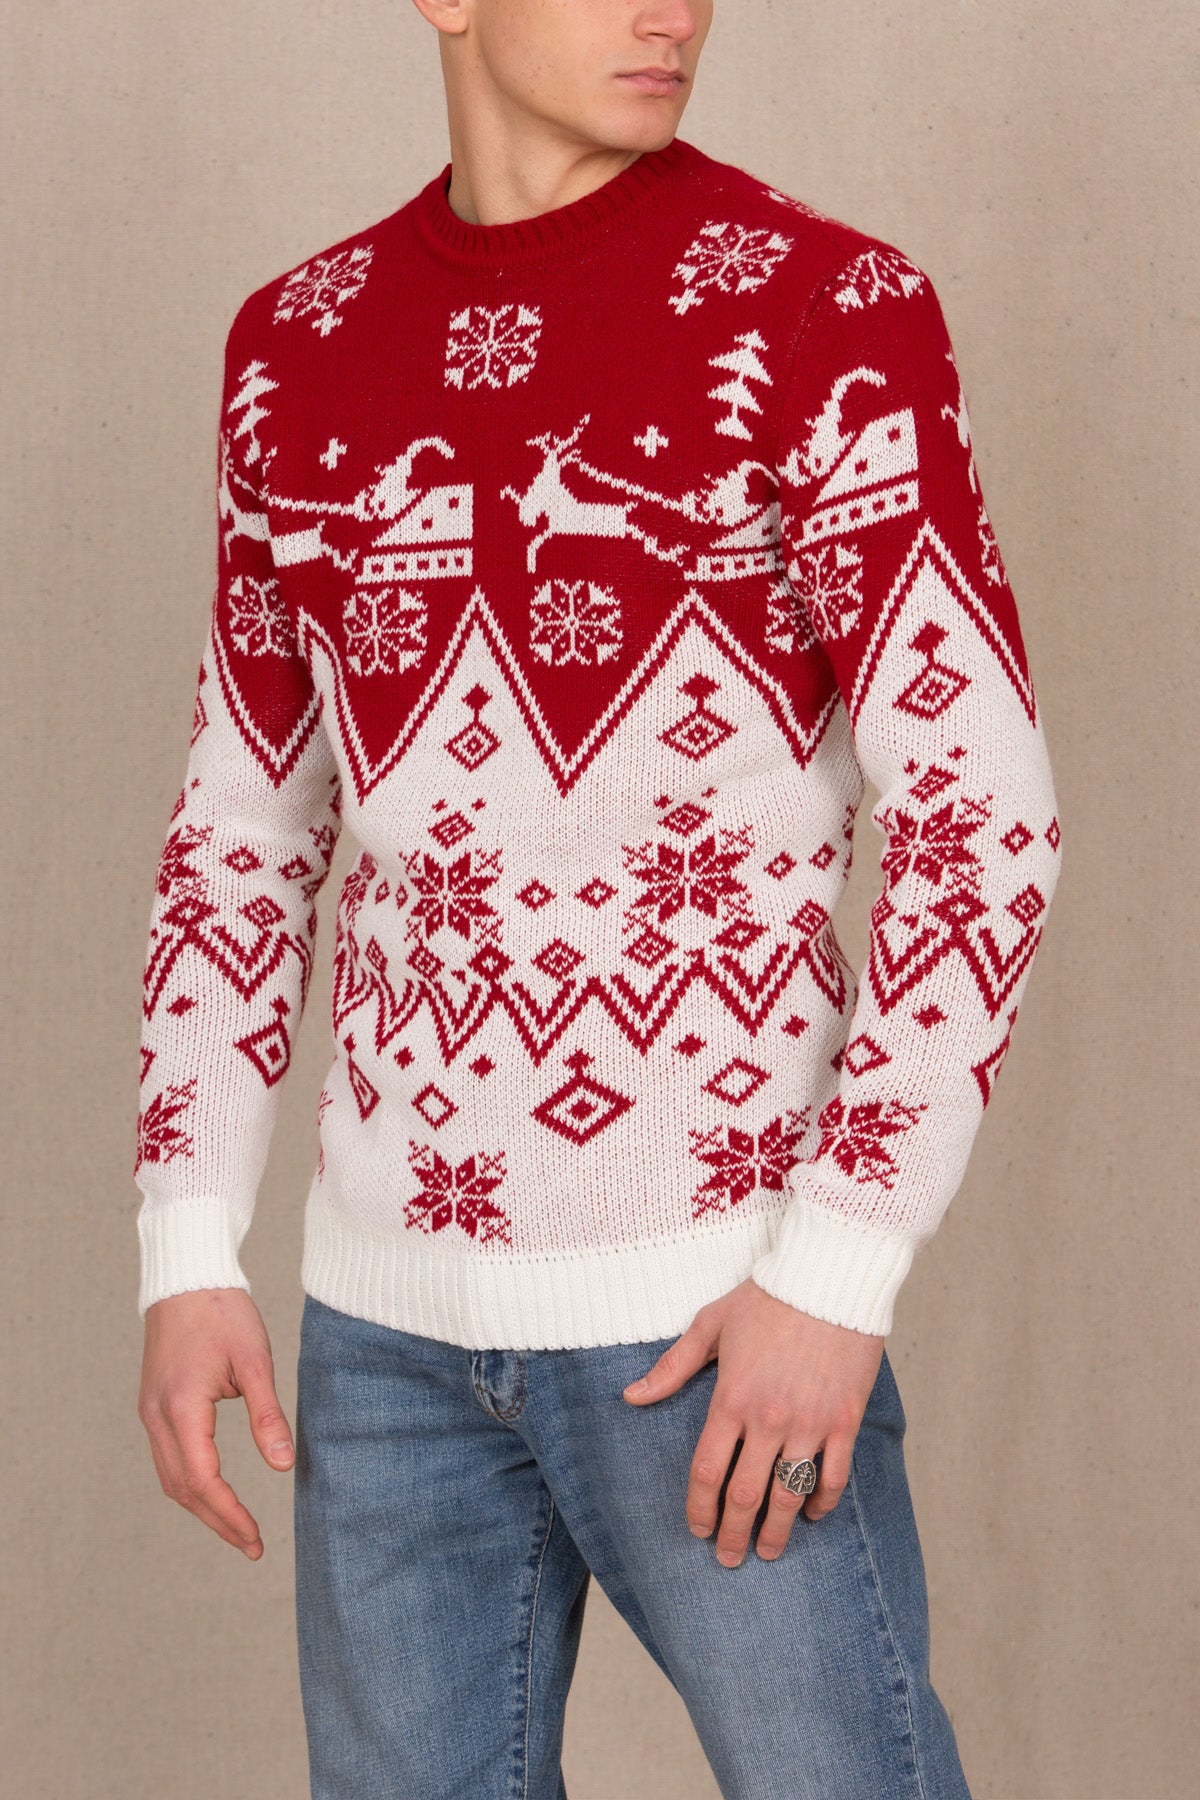 Men's christmas crew neck sweater pm22014 red-cream rosso man  - 1